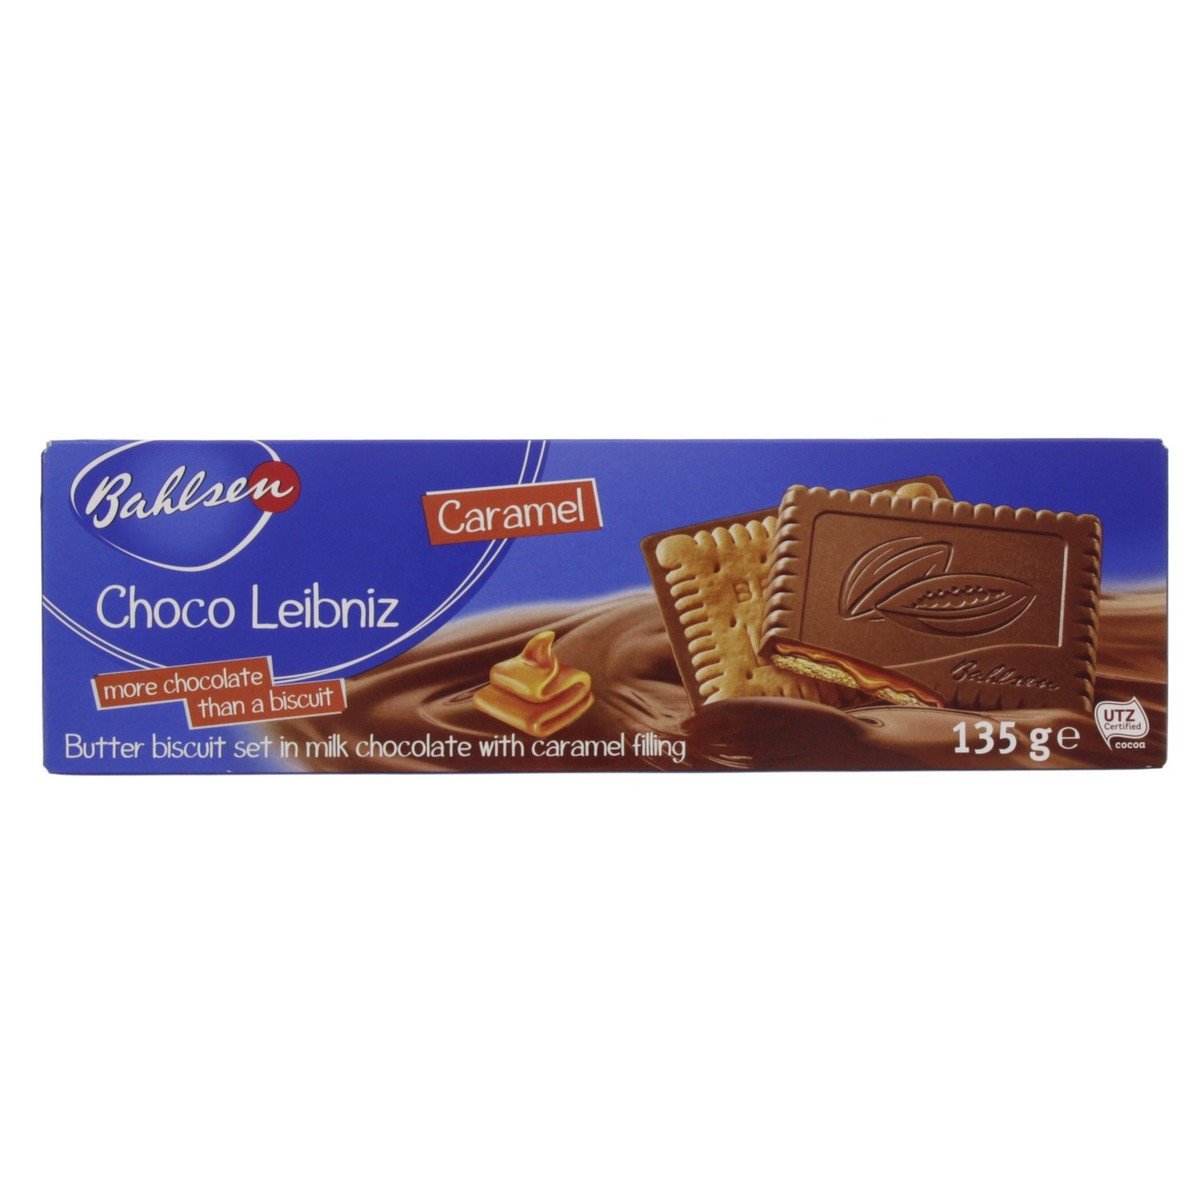 Bahlsen Choco Leibniz Caramel 135 g